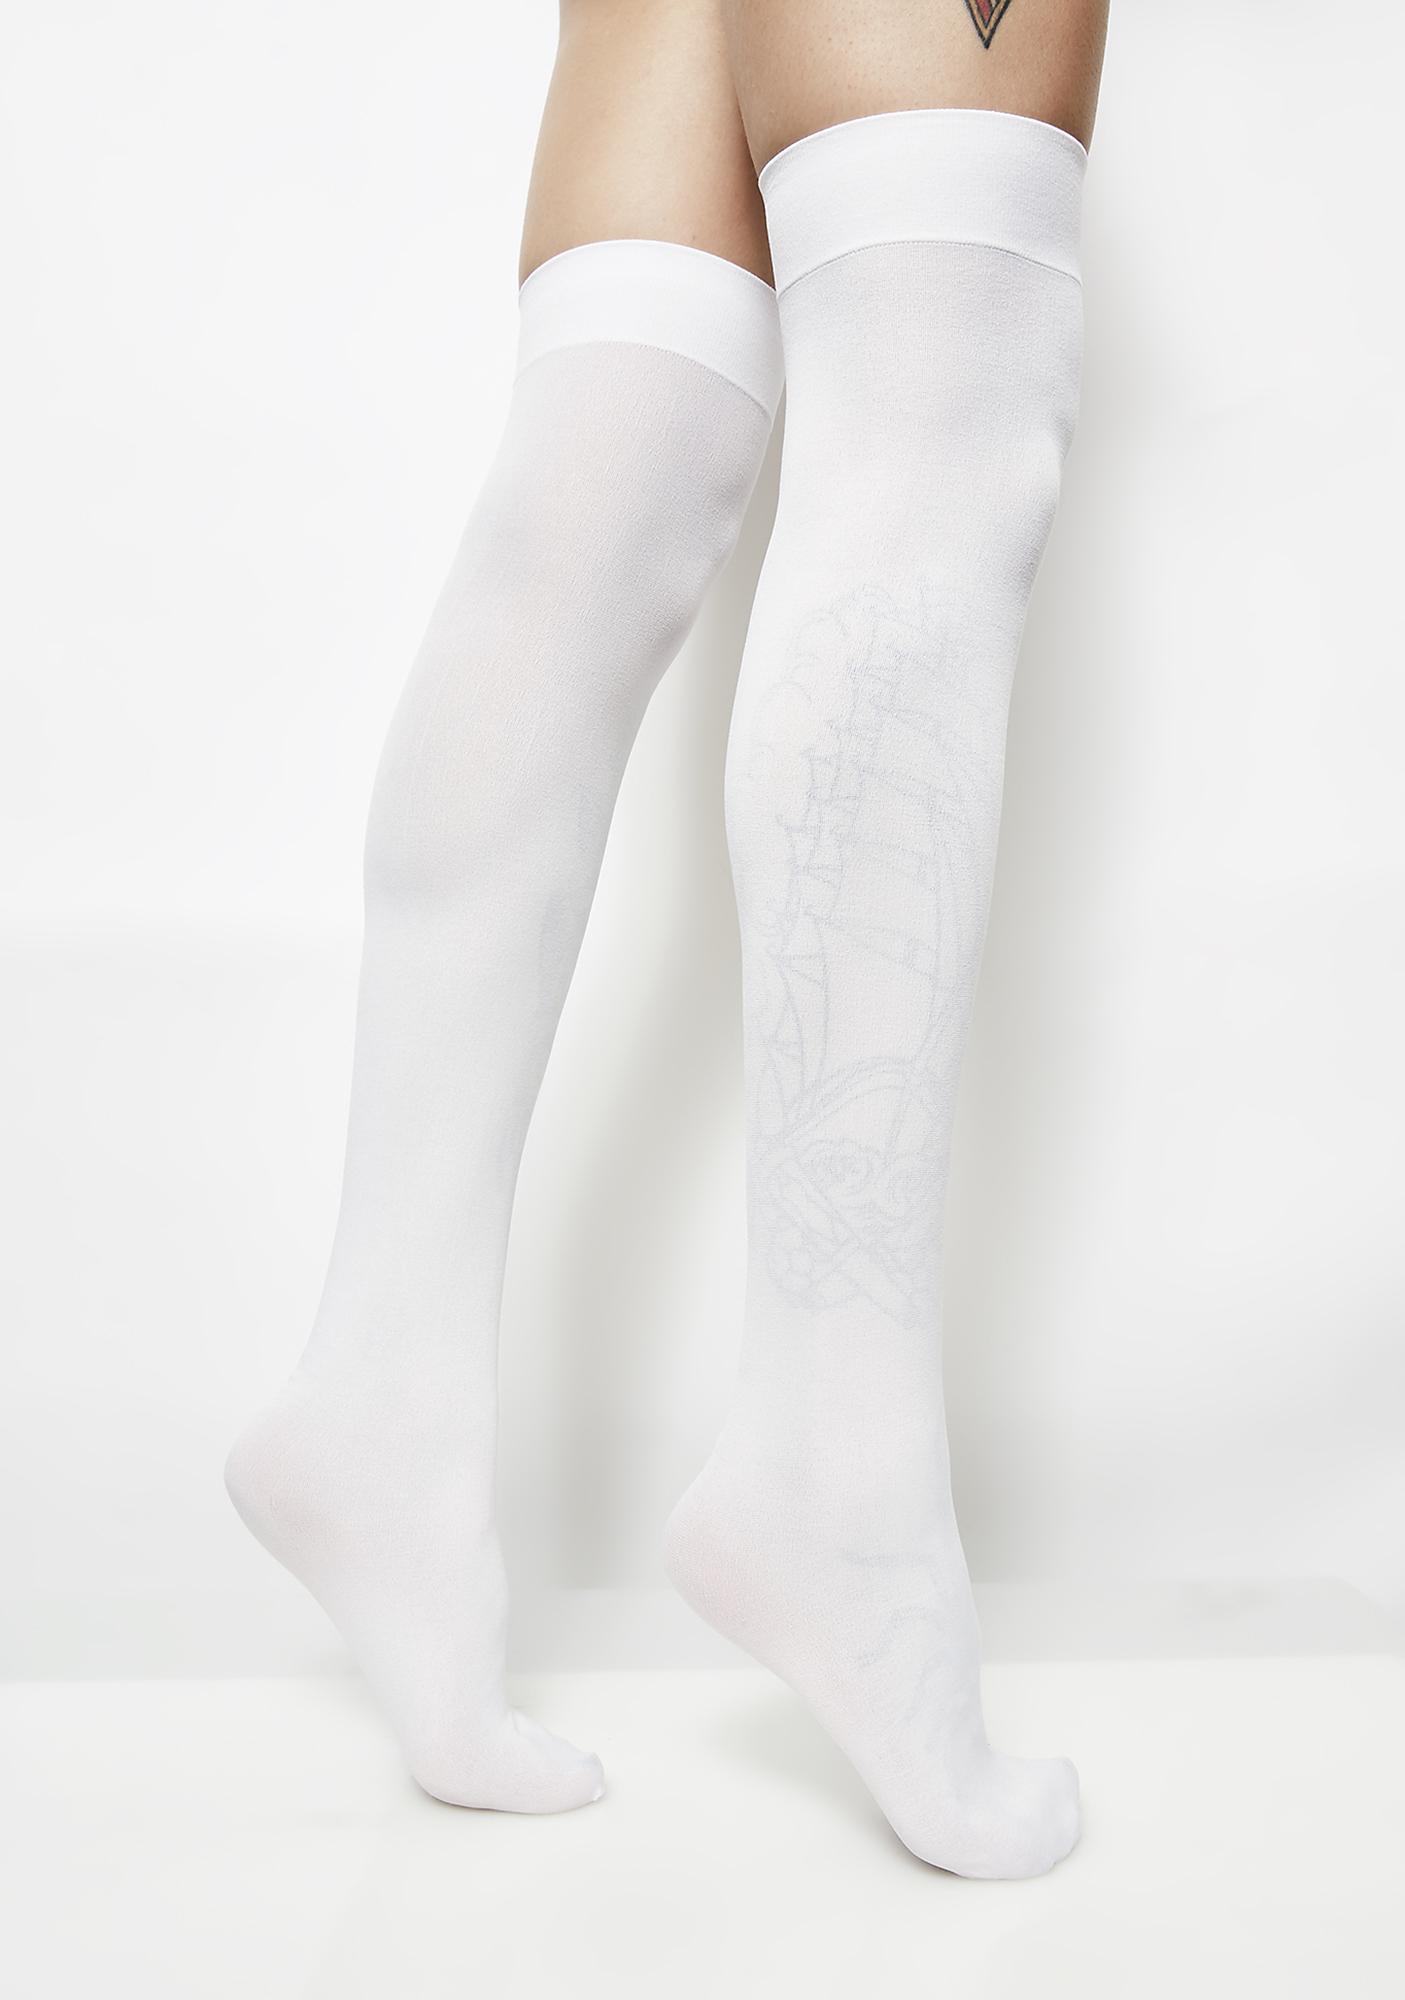 white thigh high stockings